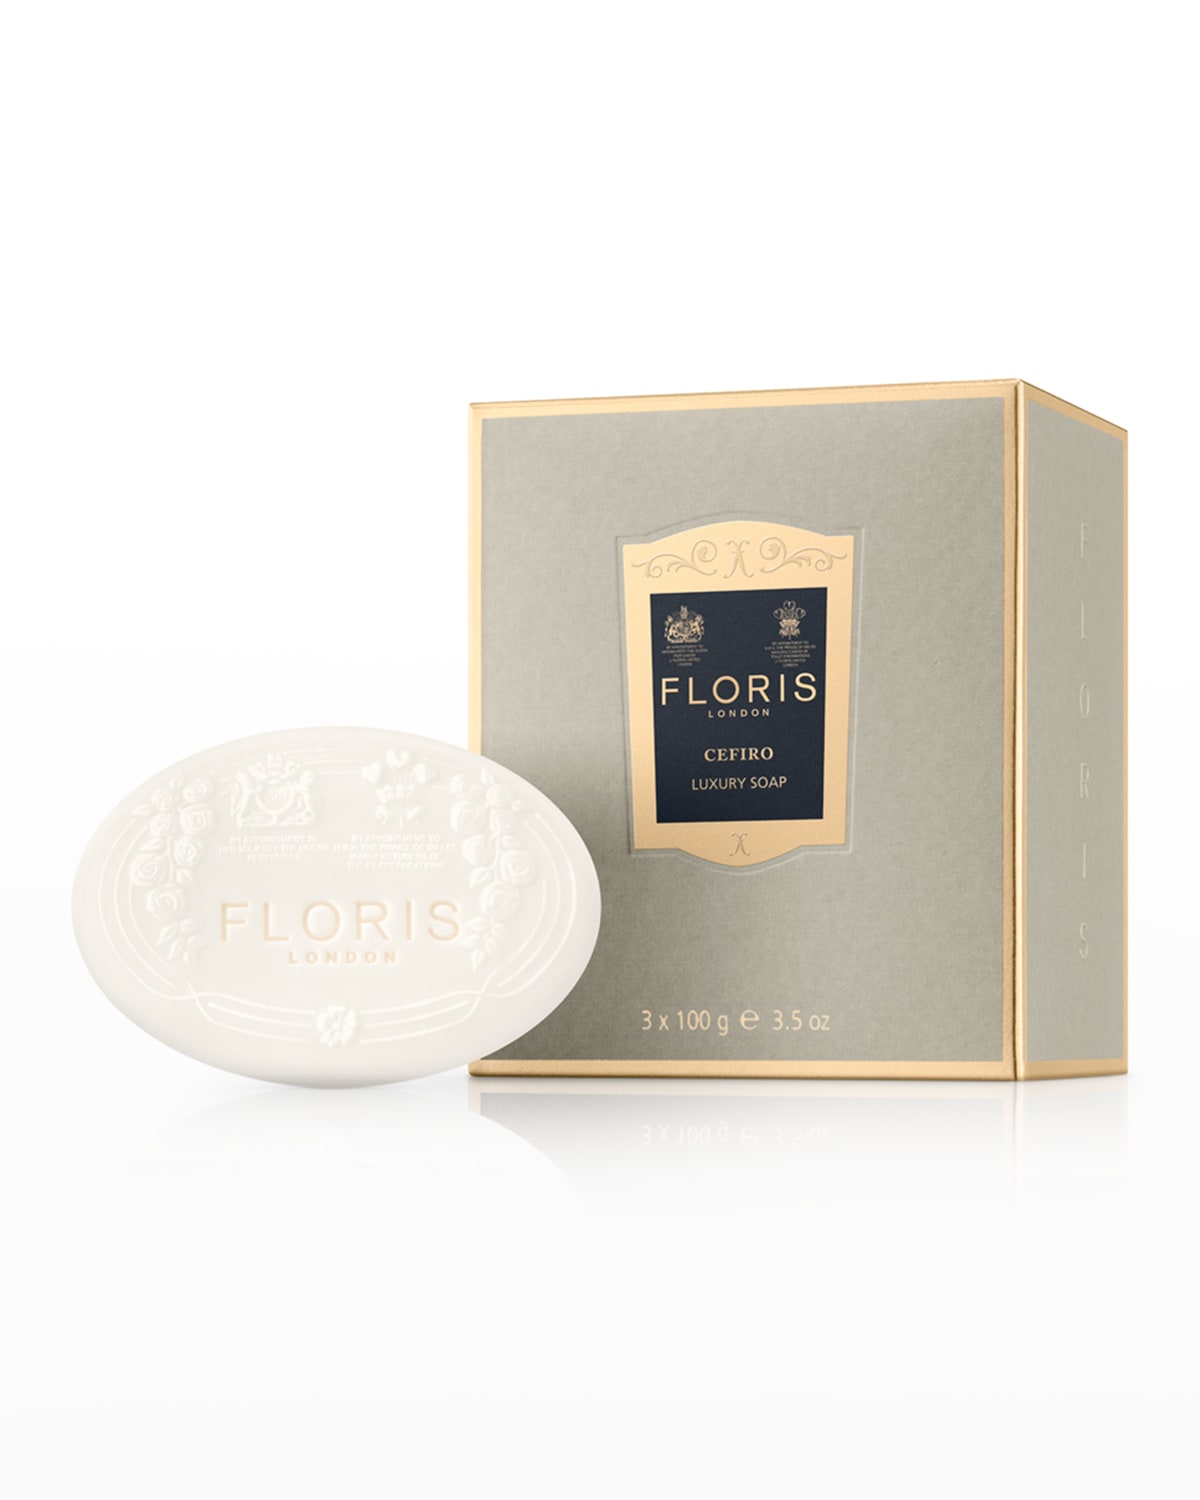 Floris London Cefiro Luxury Soap, 3 x 3.5 oz.